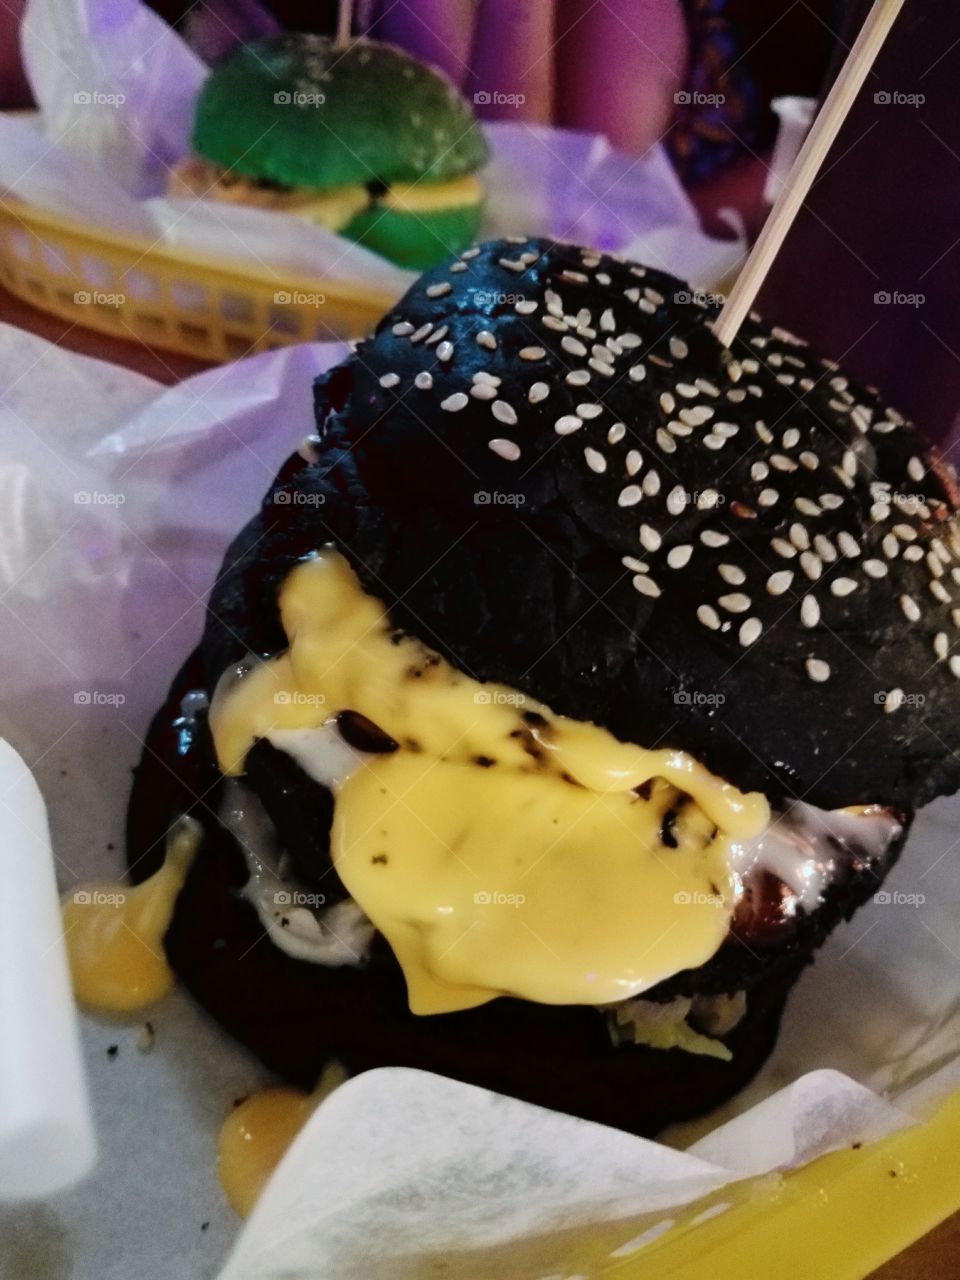 Unique burger to satisfy my craving.